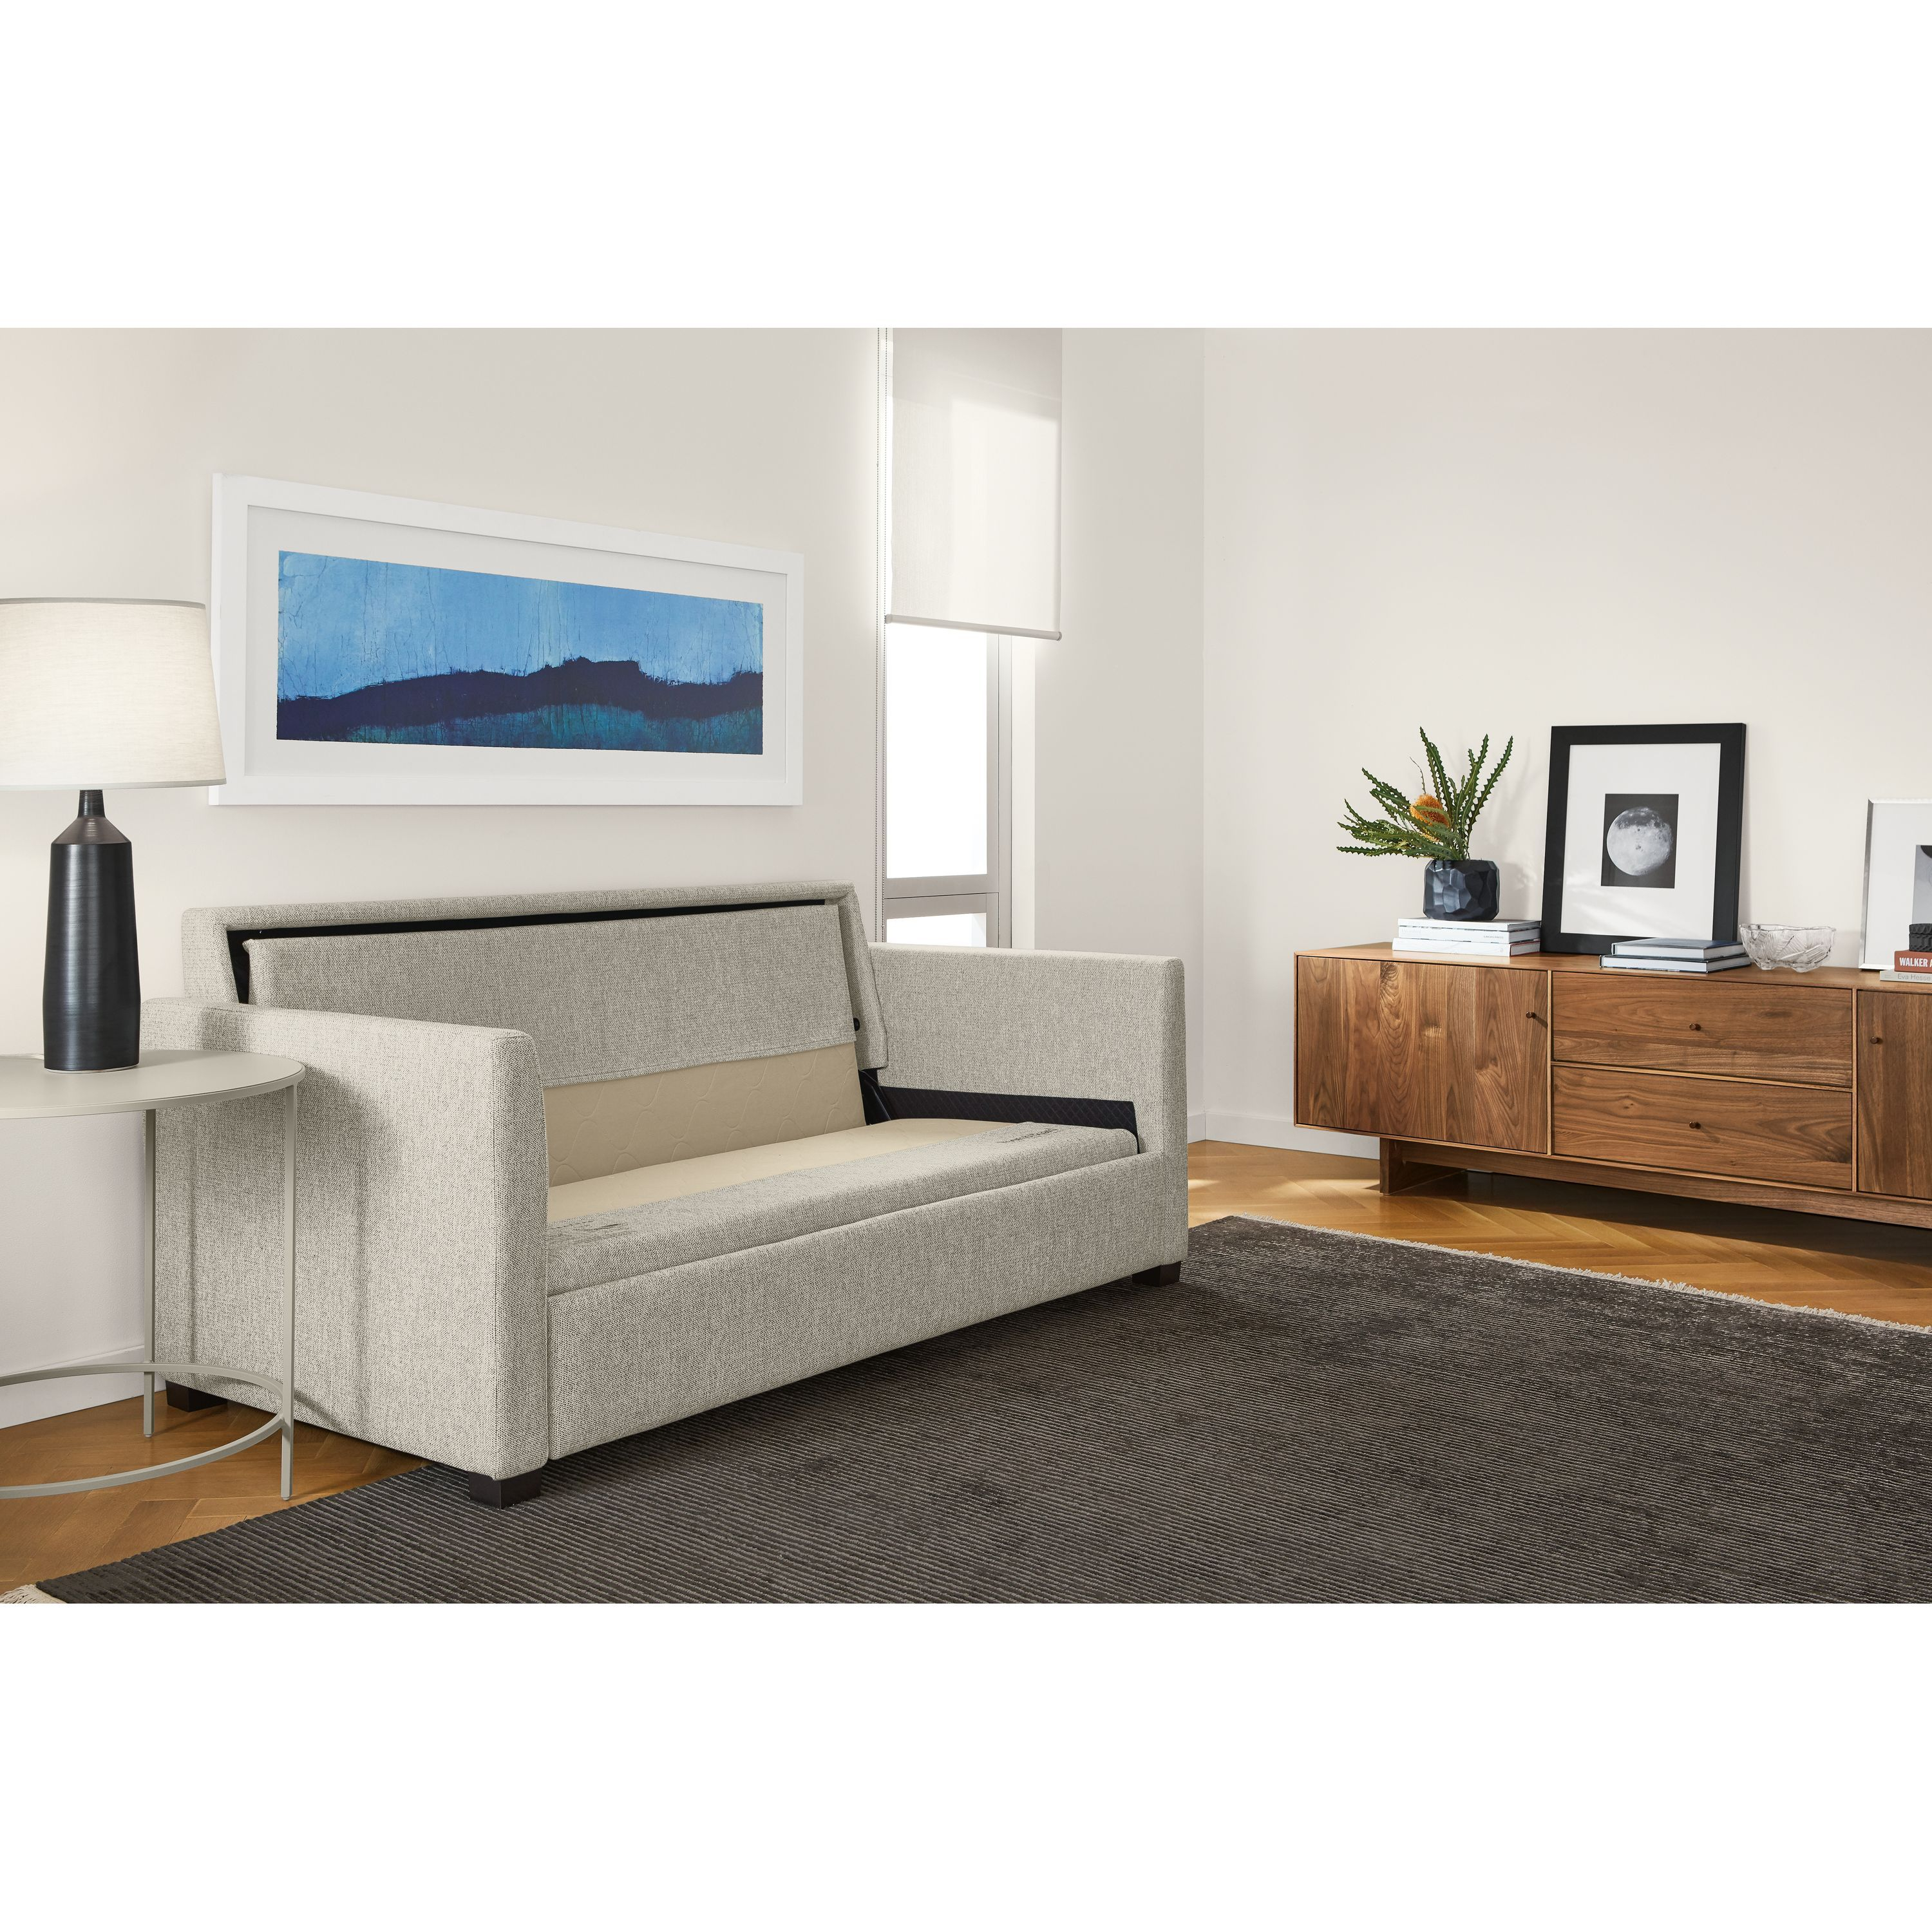 Berin Sleeper Sofa Review • Patio Ideas